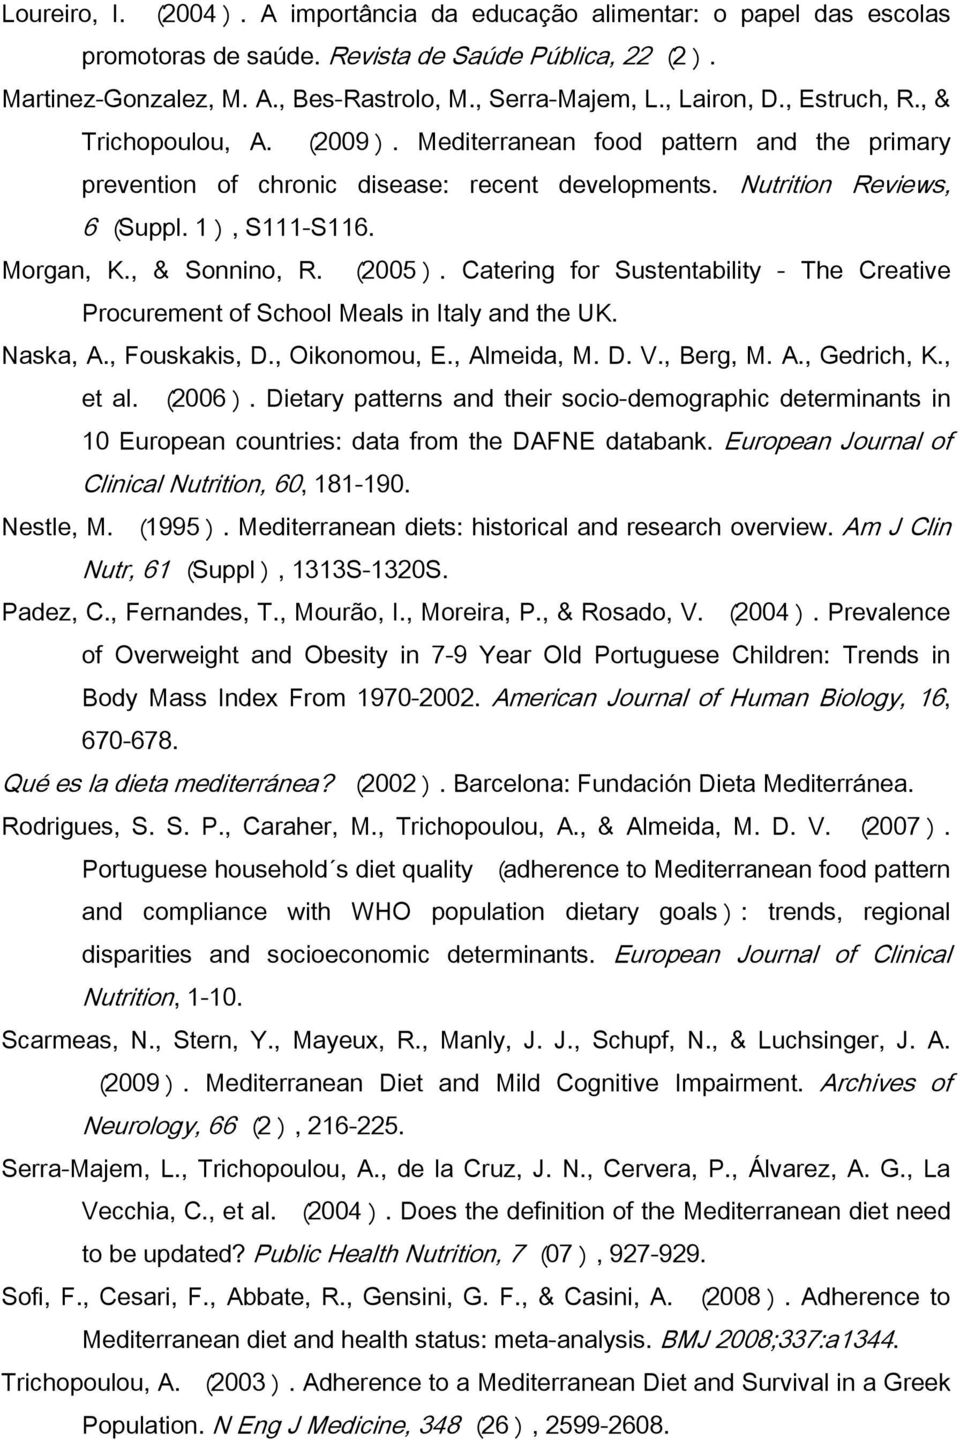 CateringforSustentability-TheCreativeProcurementofSchoolMealsinItalyandtheUK.Naska,A.,Fouskakis,D.,Oikonomou,E.,Almeida,M.D.V.,Berg,M.A.,Gedrich,K.,etal.(2006).